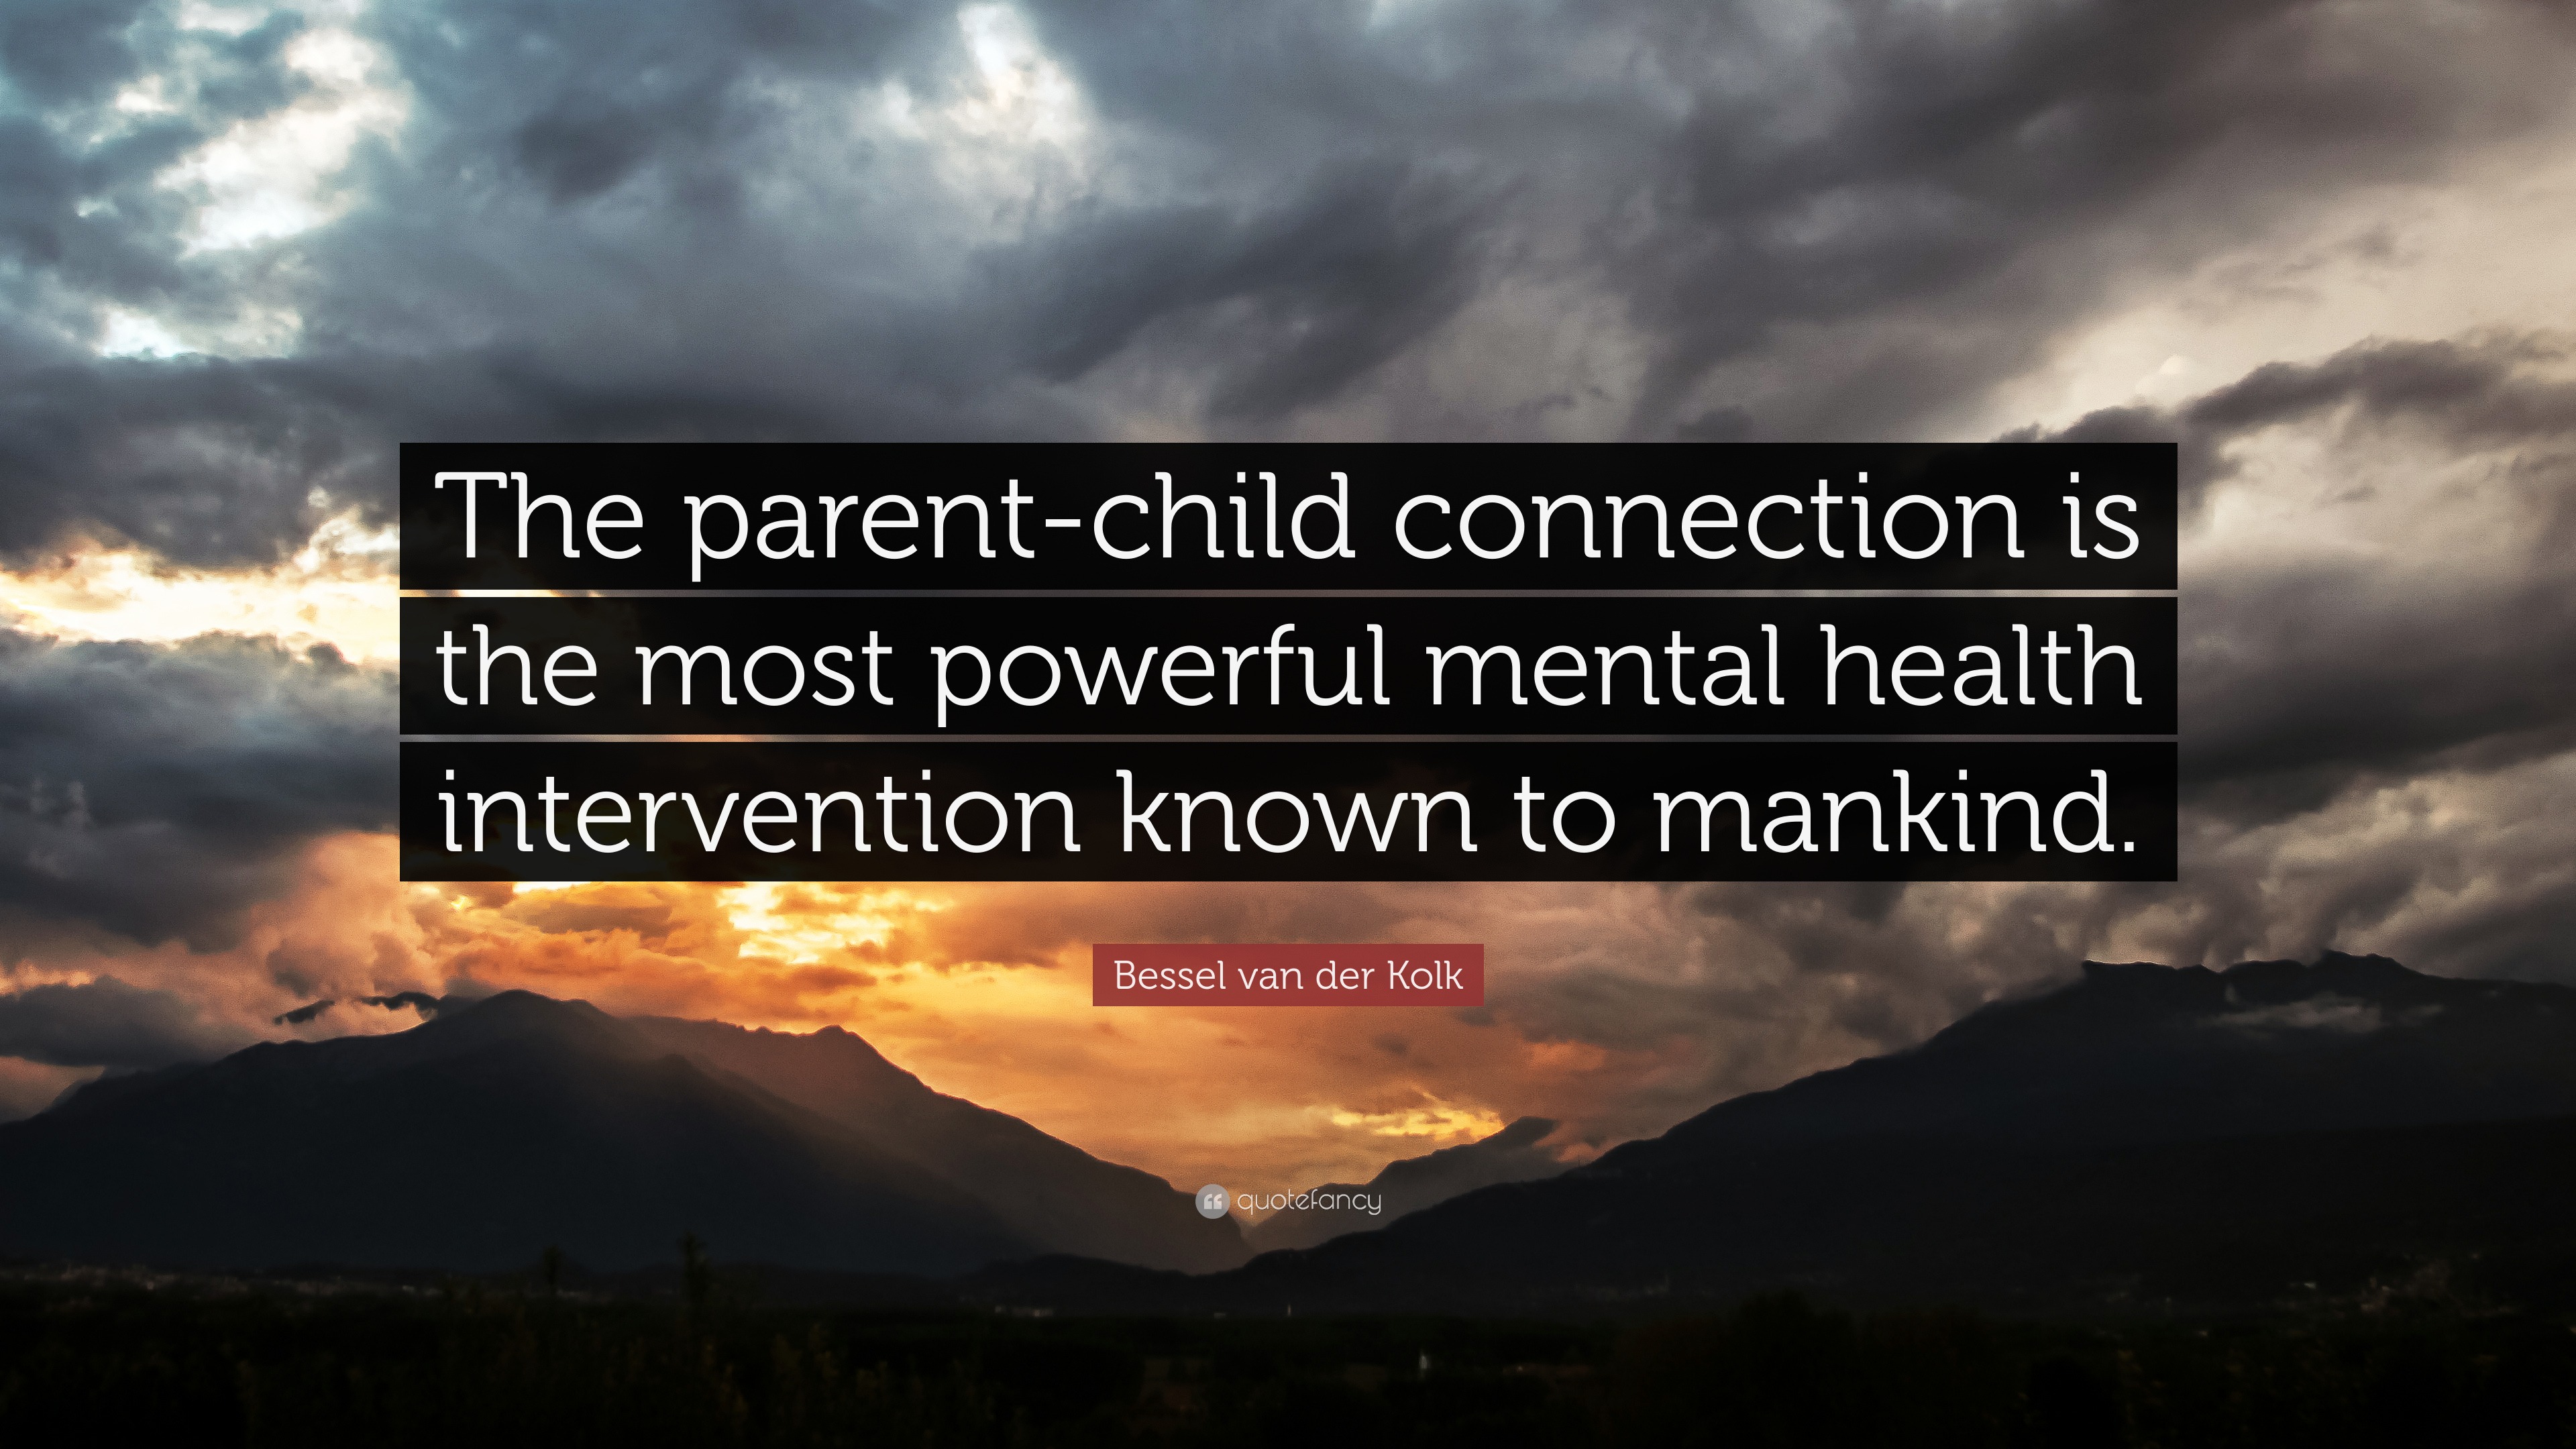 Bessel van der Kolk Quote: “The parent-child connection is the most